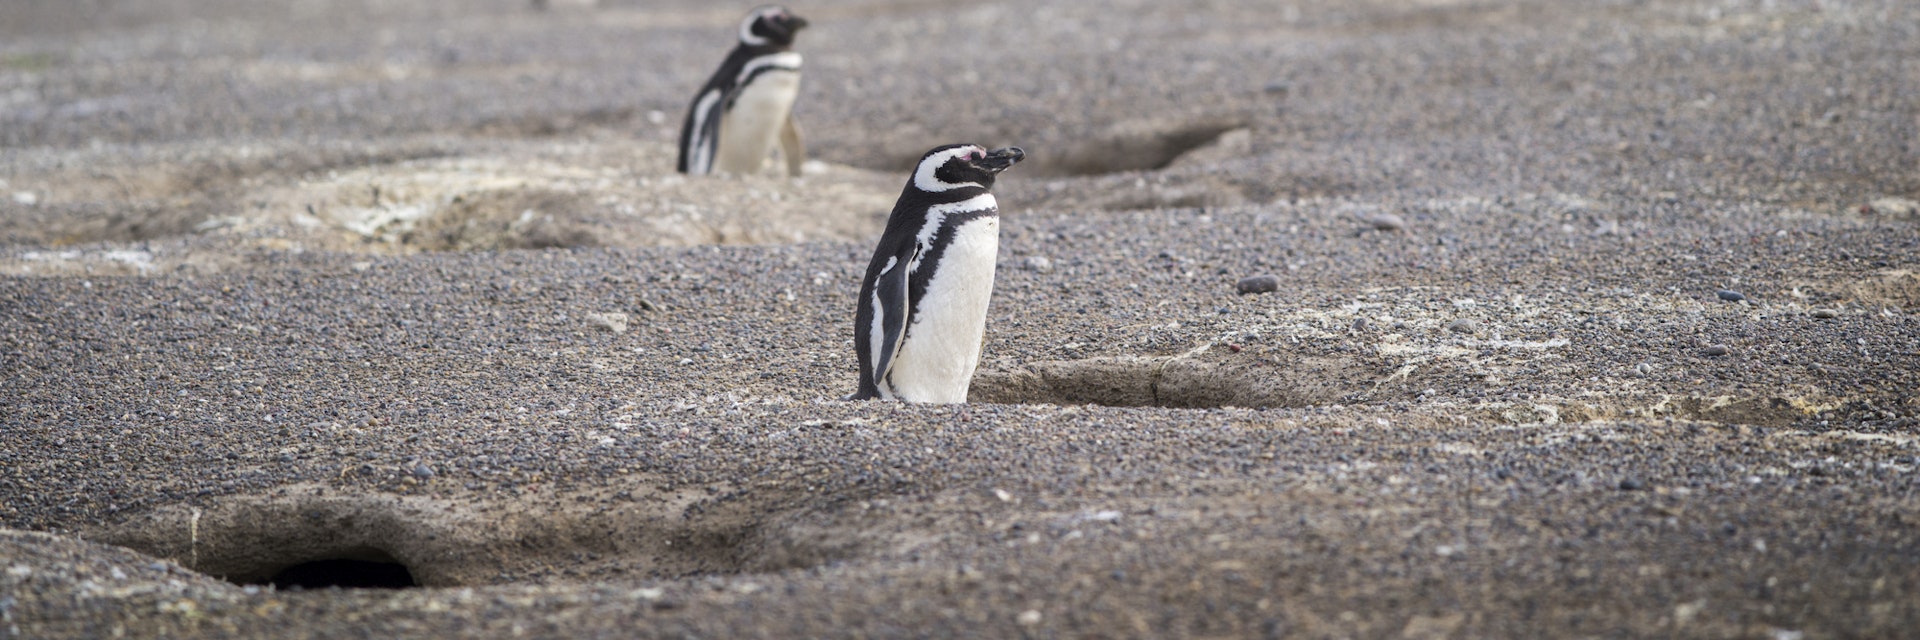 Magallanic Penguin in Punta Tombo
683321767